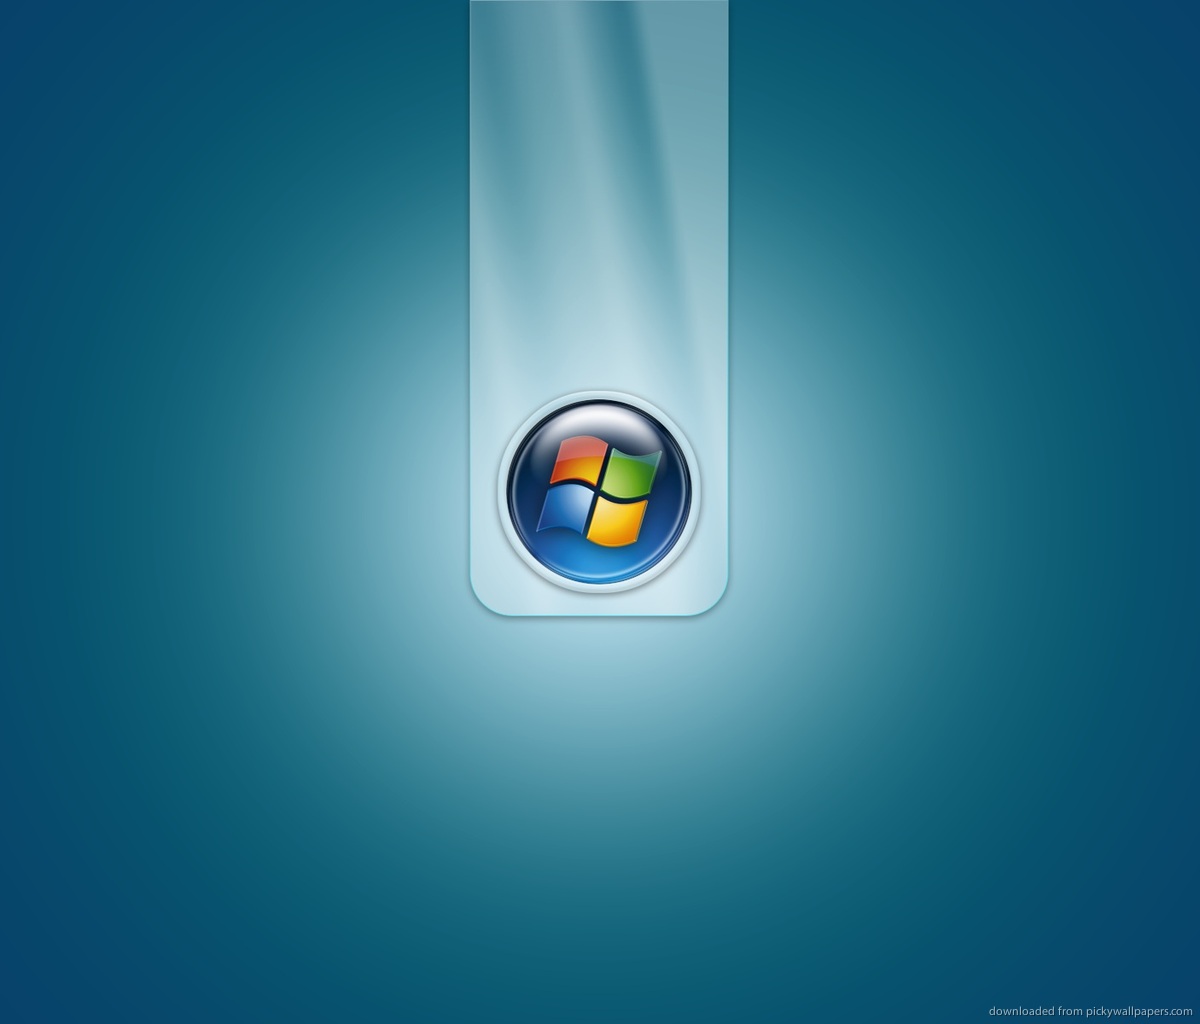 Windows Logo Wallpaper For Samsung Galaxy Tab